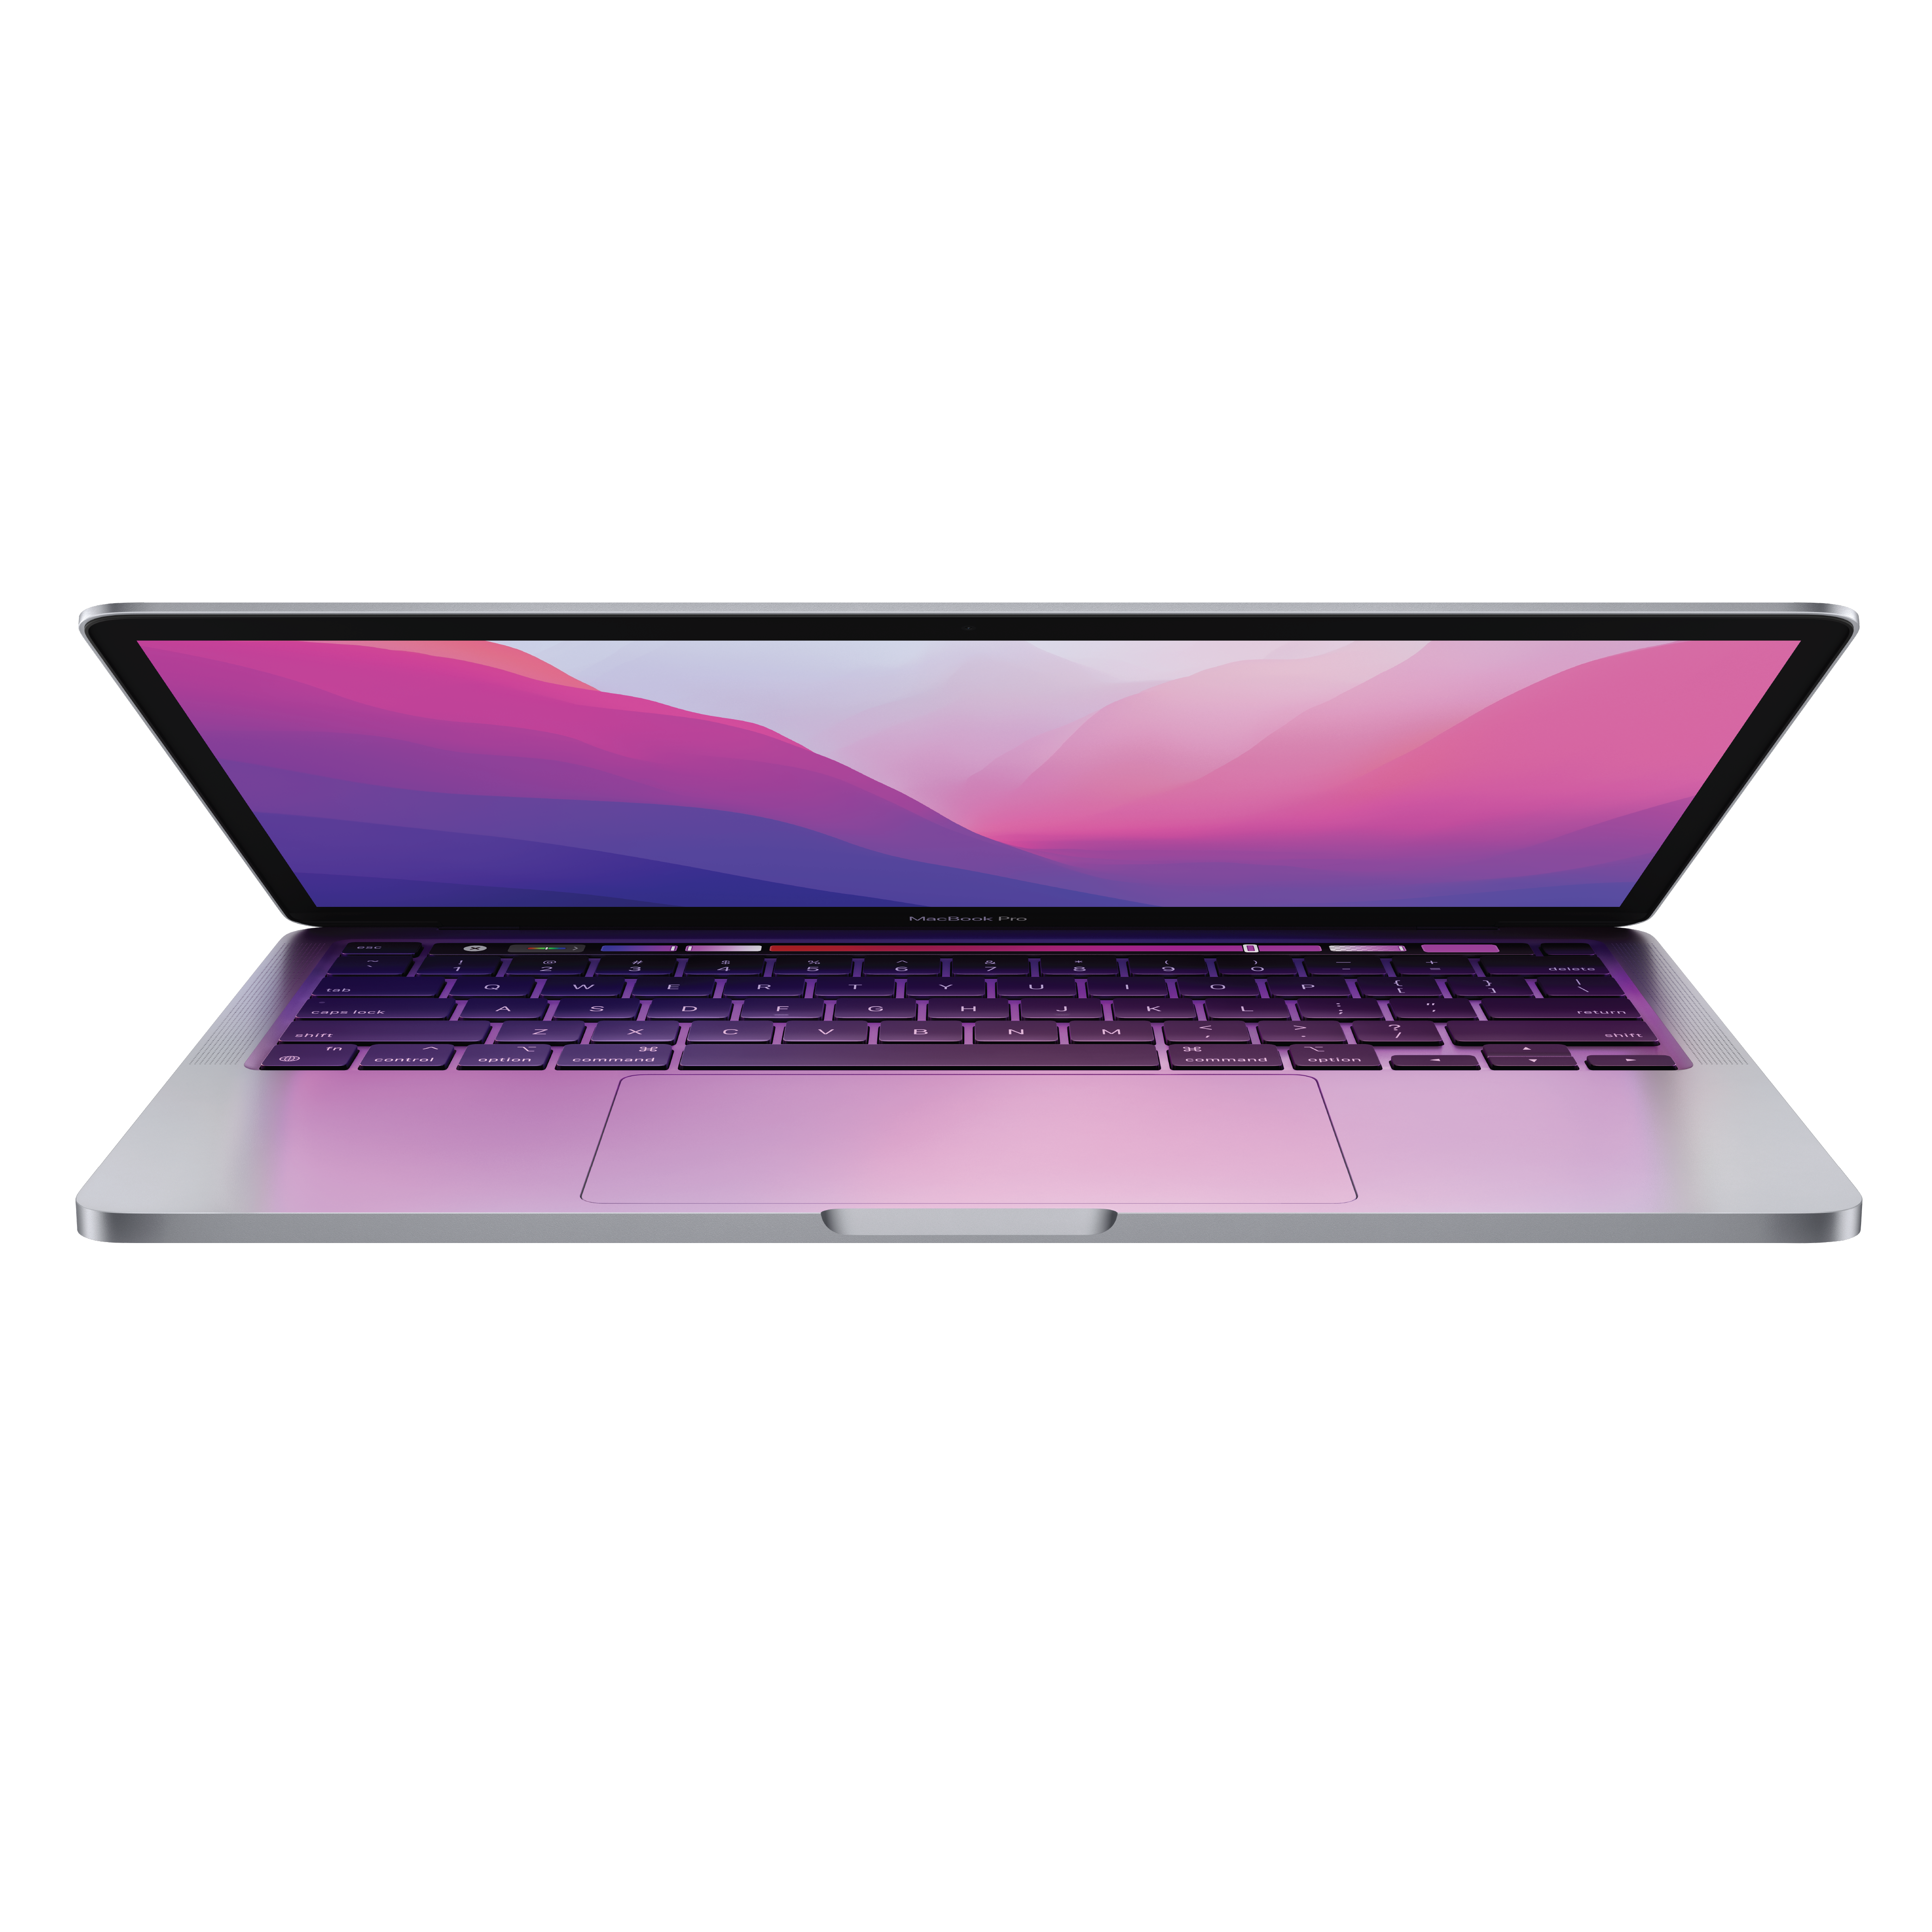 MacBook Pro SSD, Apple M1 Max chip) - ImagineOnline